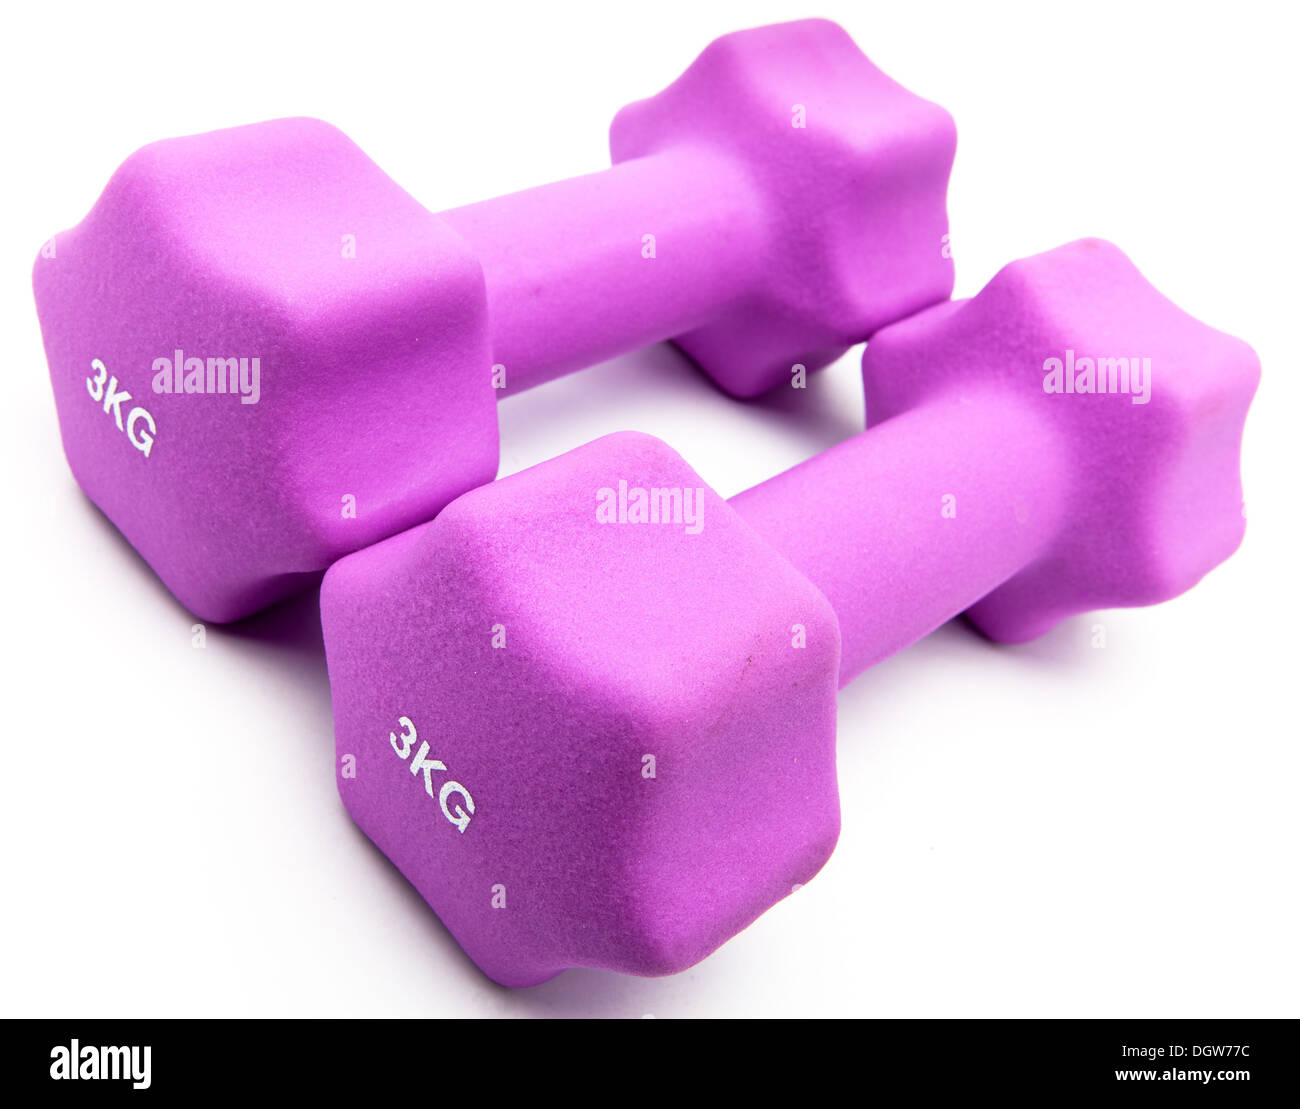 Pink 3 kg dumbbells in a neoprene cover Stock Photo